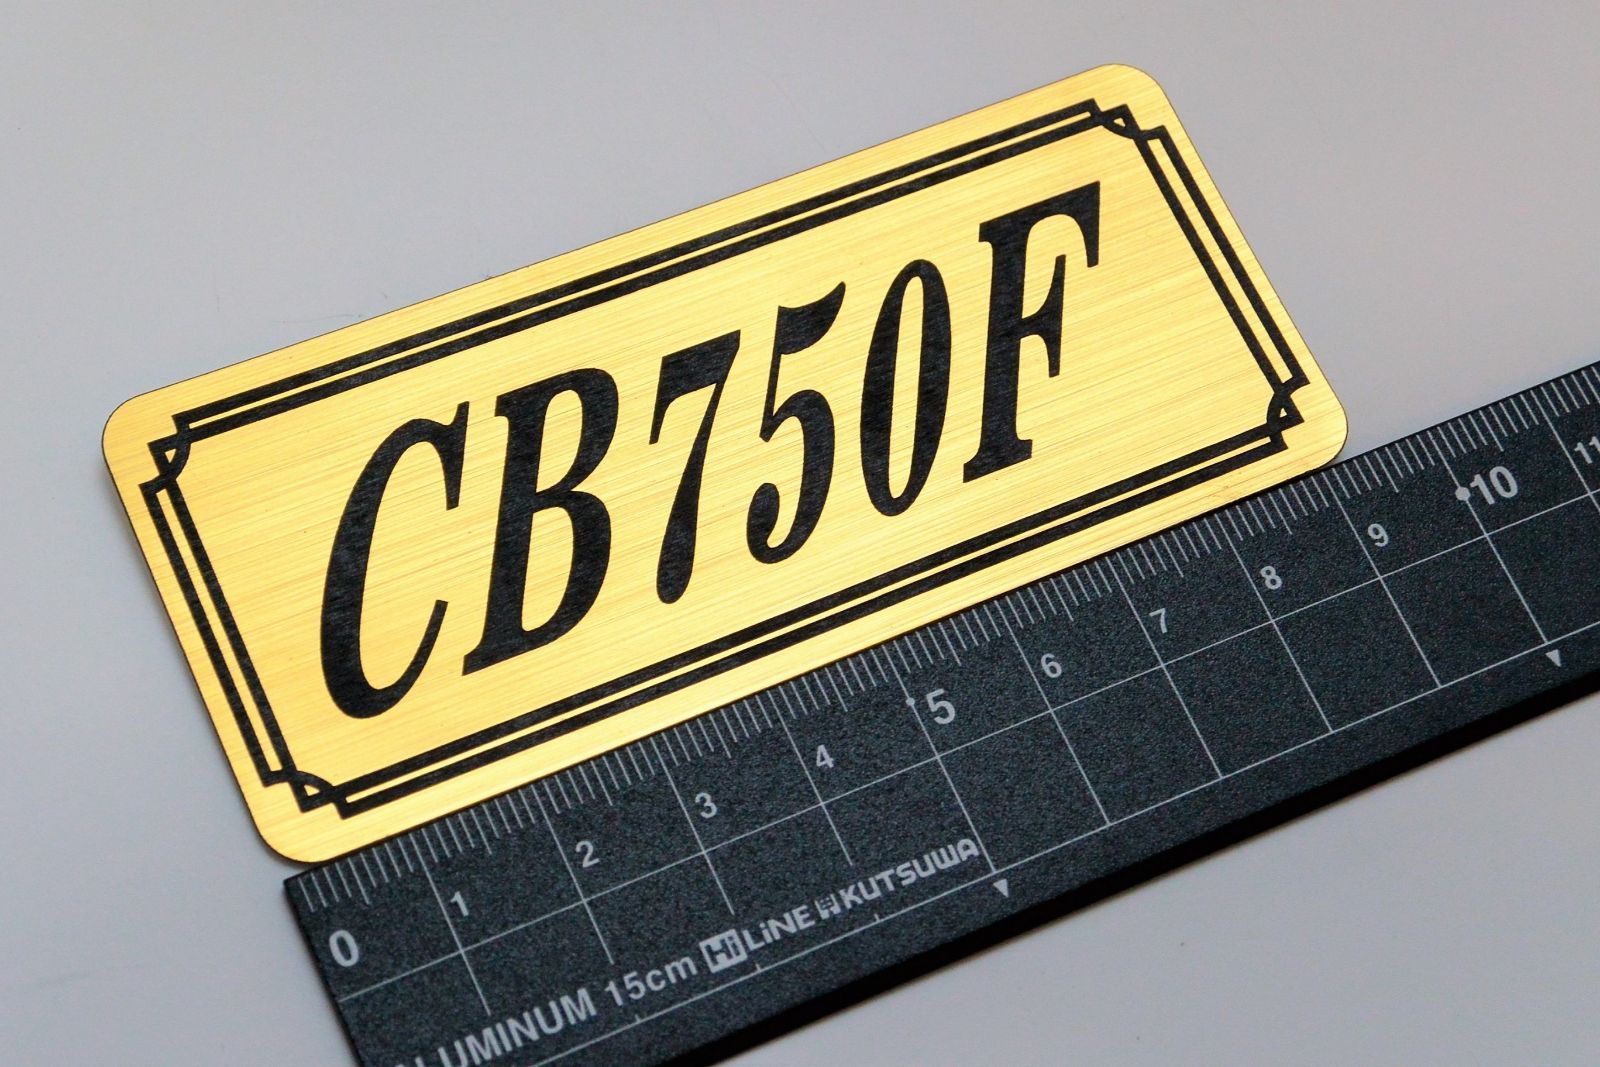 B-20-1 CB750F 金/黒 オリジナル ステッカー CB A B C D Z ビキニカウル サイドカバー カウル カスタム 外装 タンク  スイングアーム 等に - メルカリ